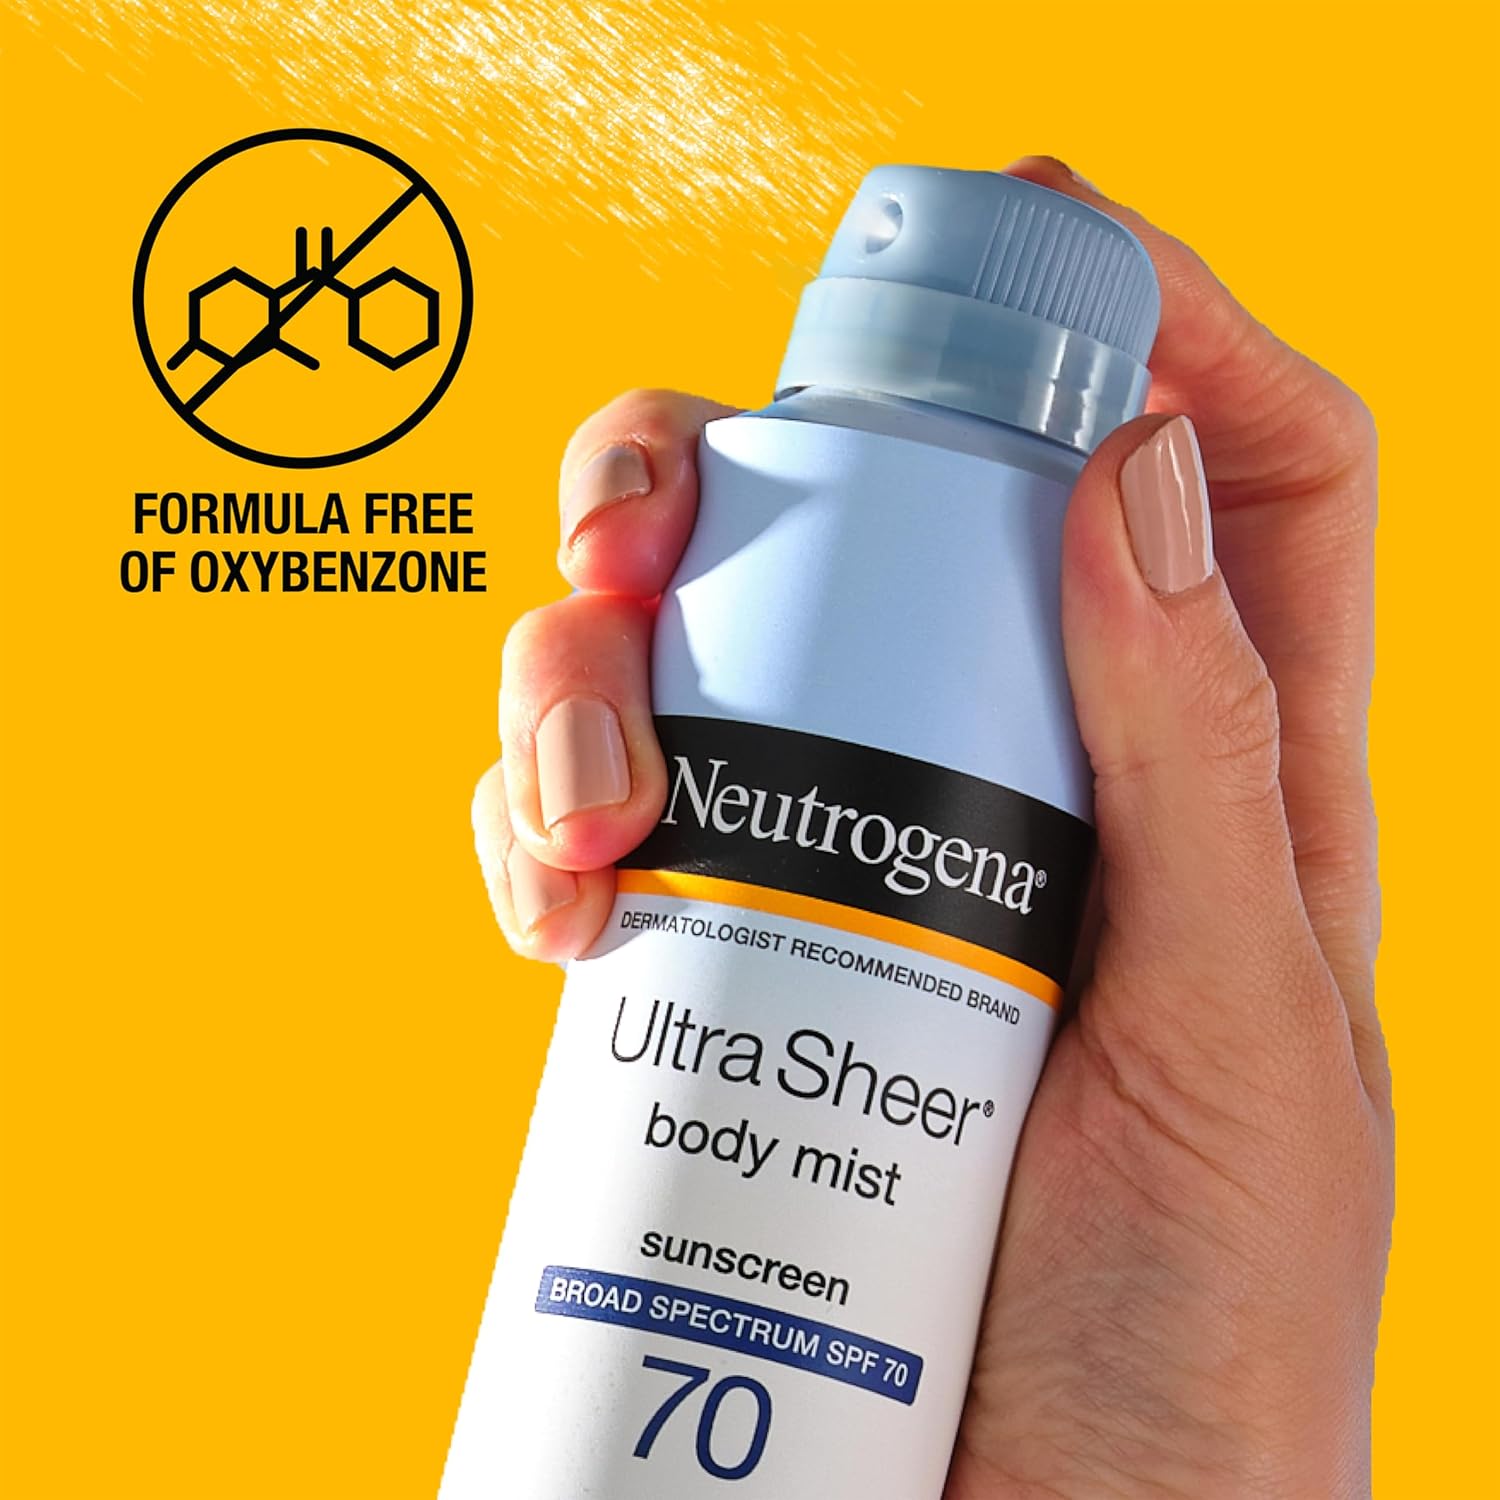 Neutrogena Ultra Sheer Body Mist SPF 70 Sunscreen Spray, Broad Spectrum UVA/UVB Protection, Lightweight, Non-Greasy Water Resistant Body Sunscreen Mist, Non-Comedogenic, 5 oz : Beauty & Personal Care